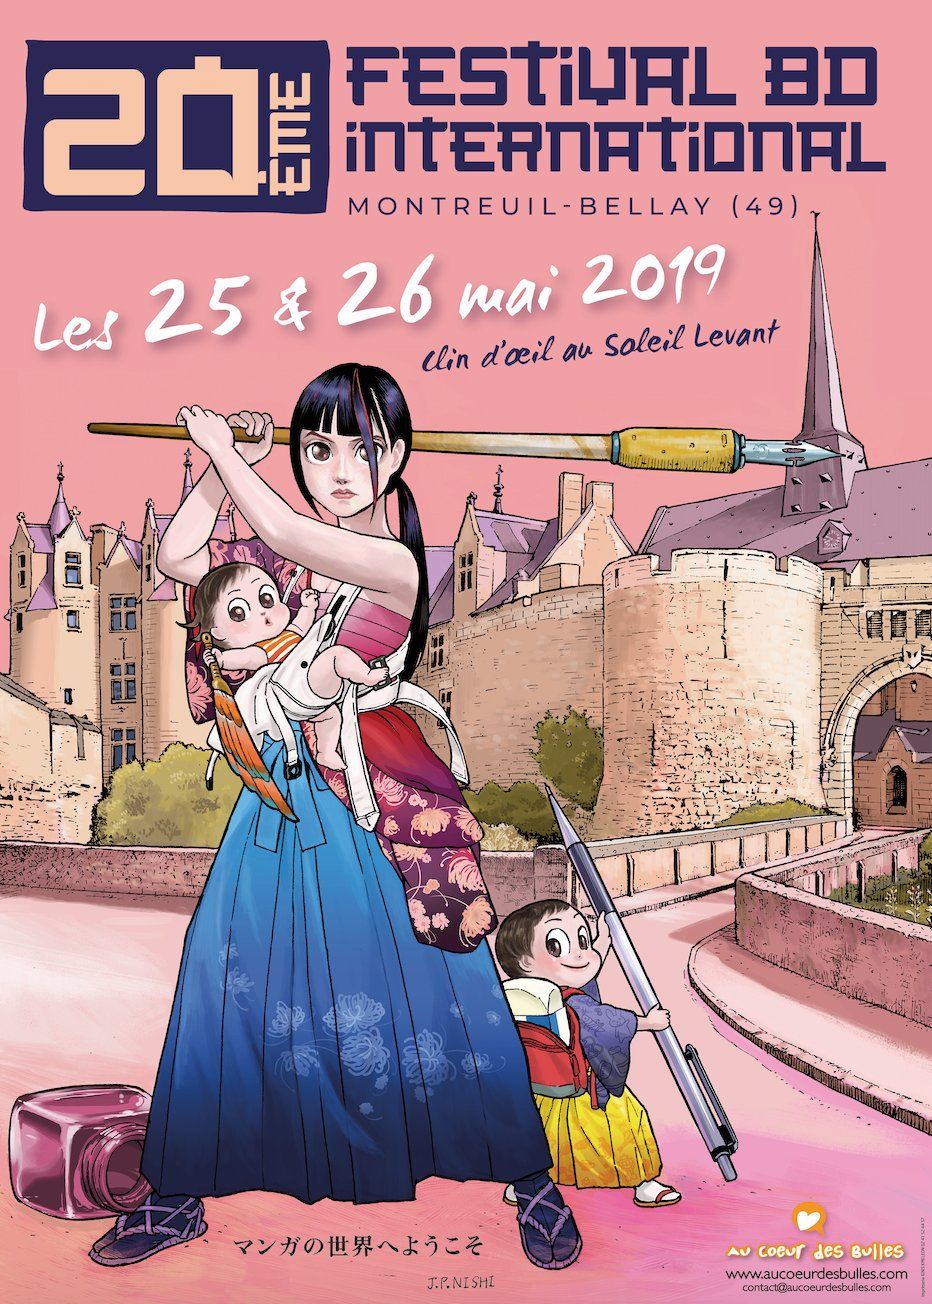 festival-bs-international-montreuil-bellay.jpg